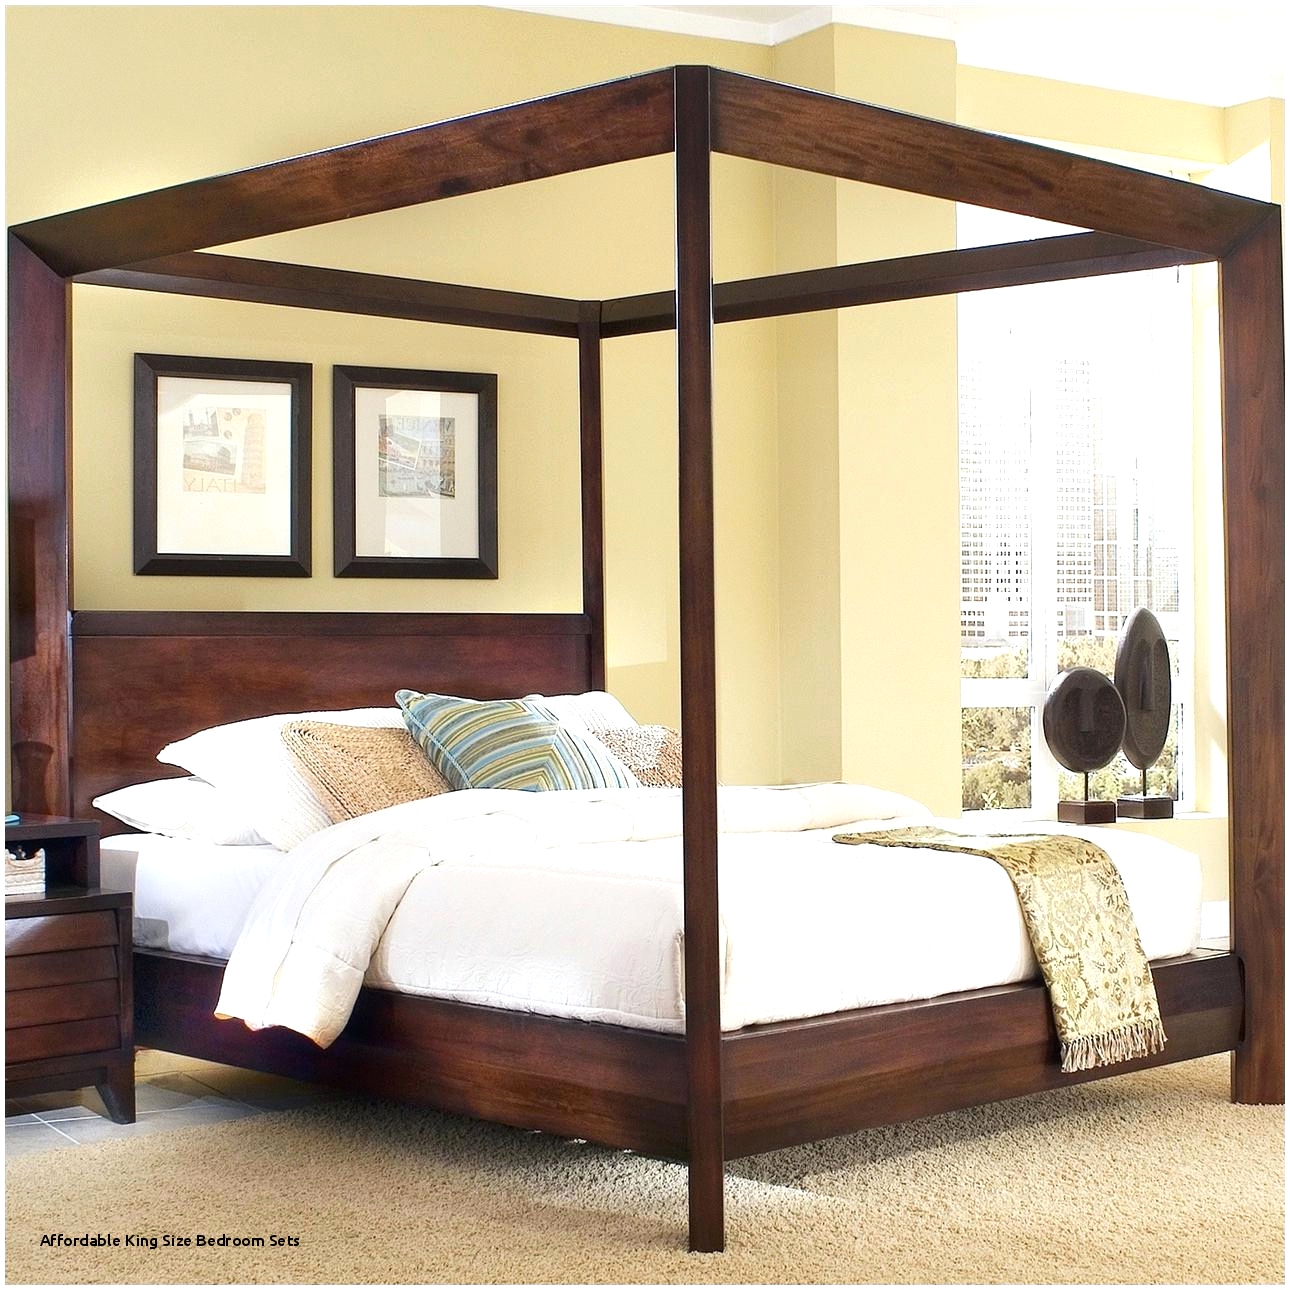 Cheap Full Size Bedroom Sets Beautiful Bedroom Design 0d Archives Best Affordable King Size Bedroom Sets